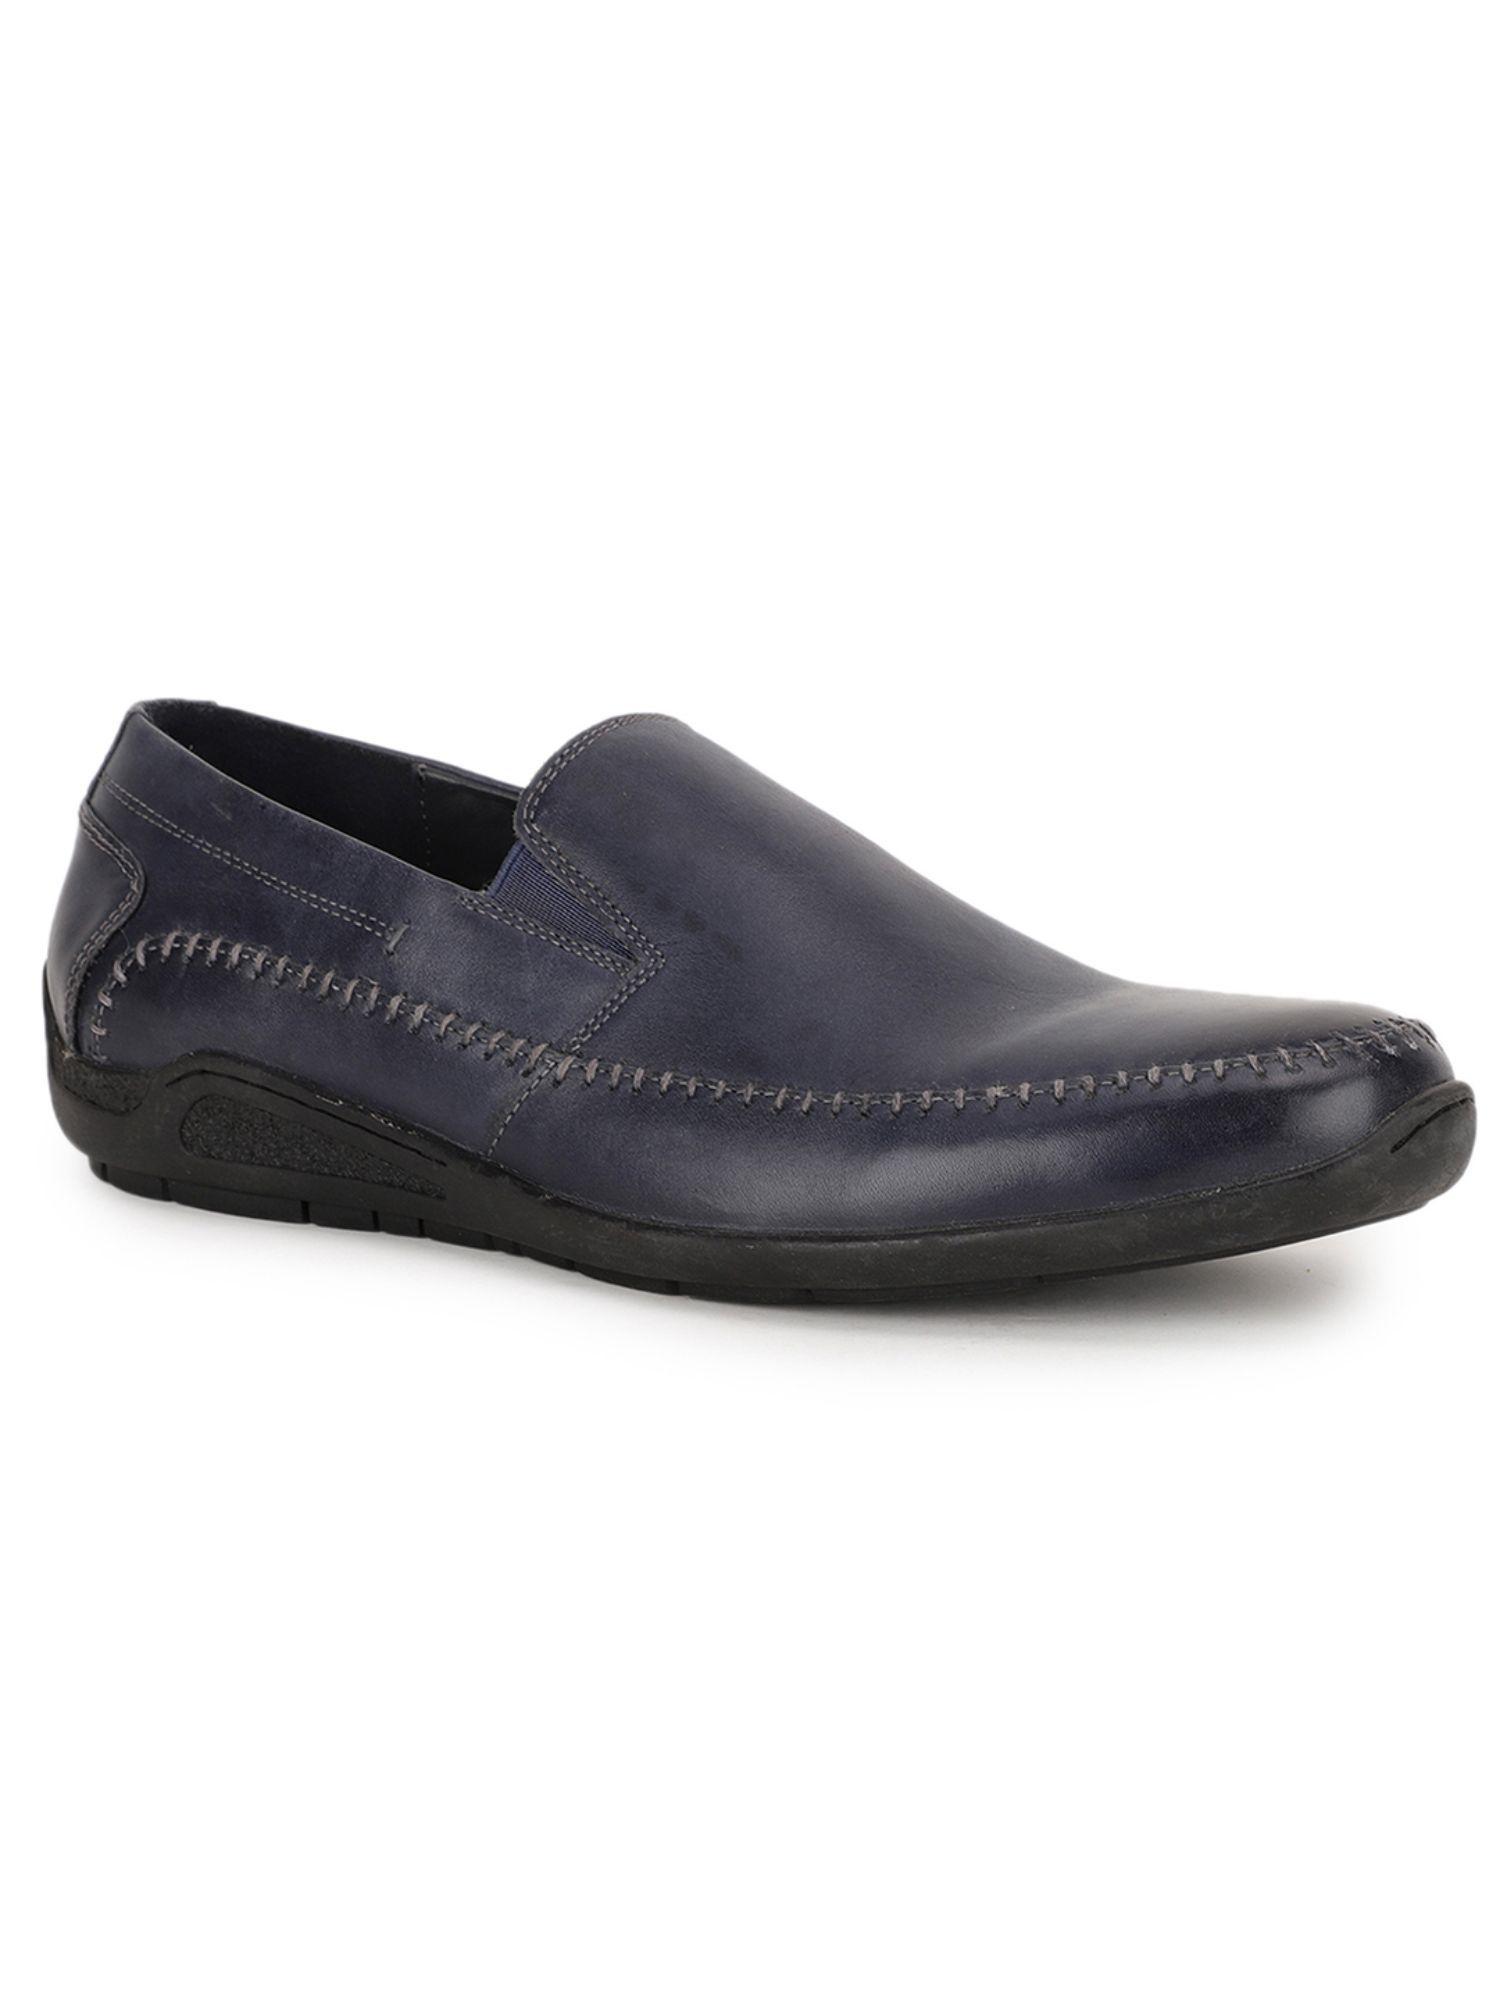 mens navy blue slip on formal loafers